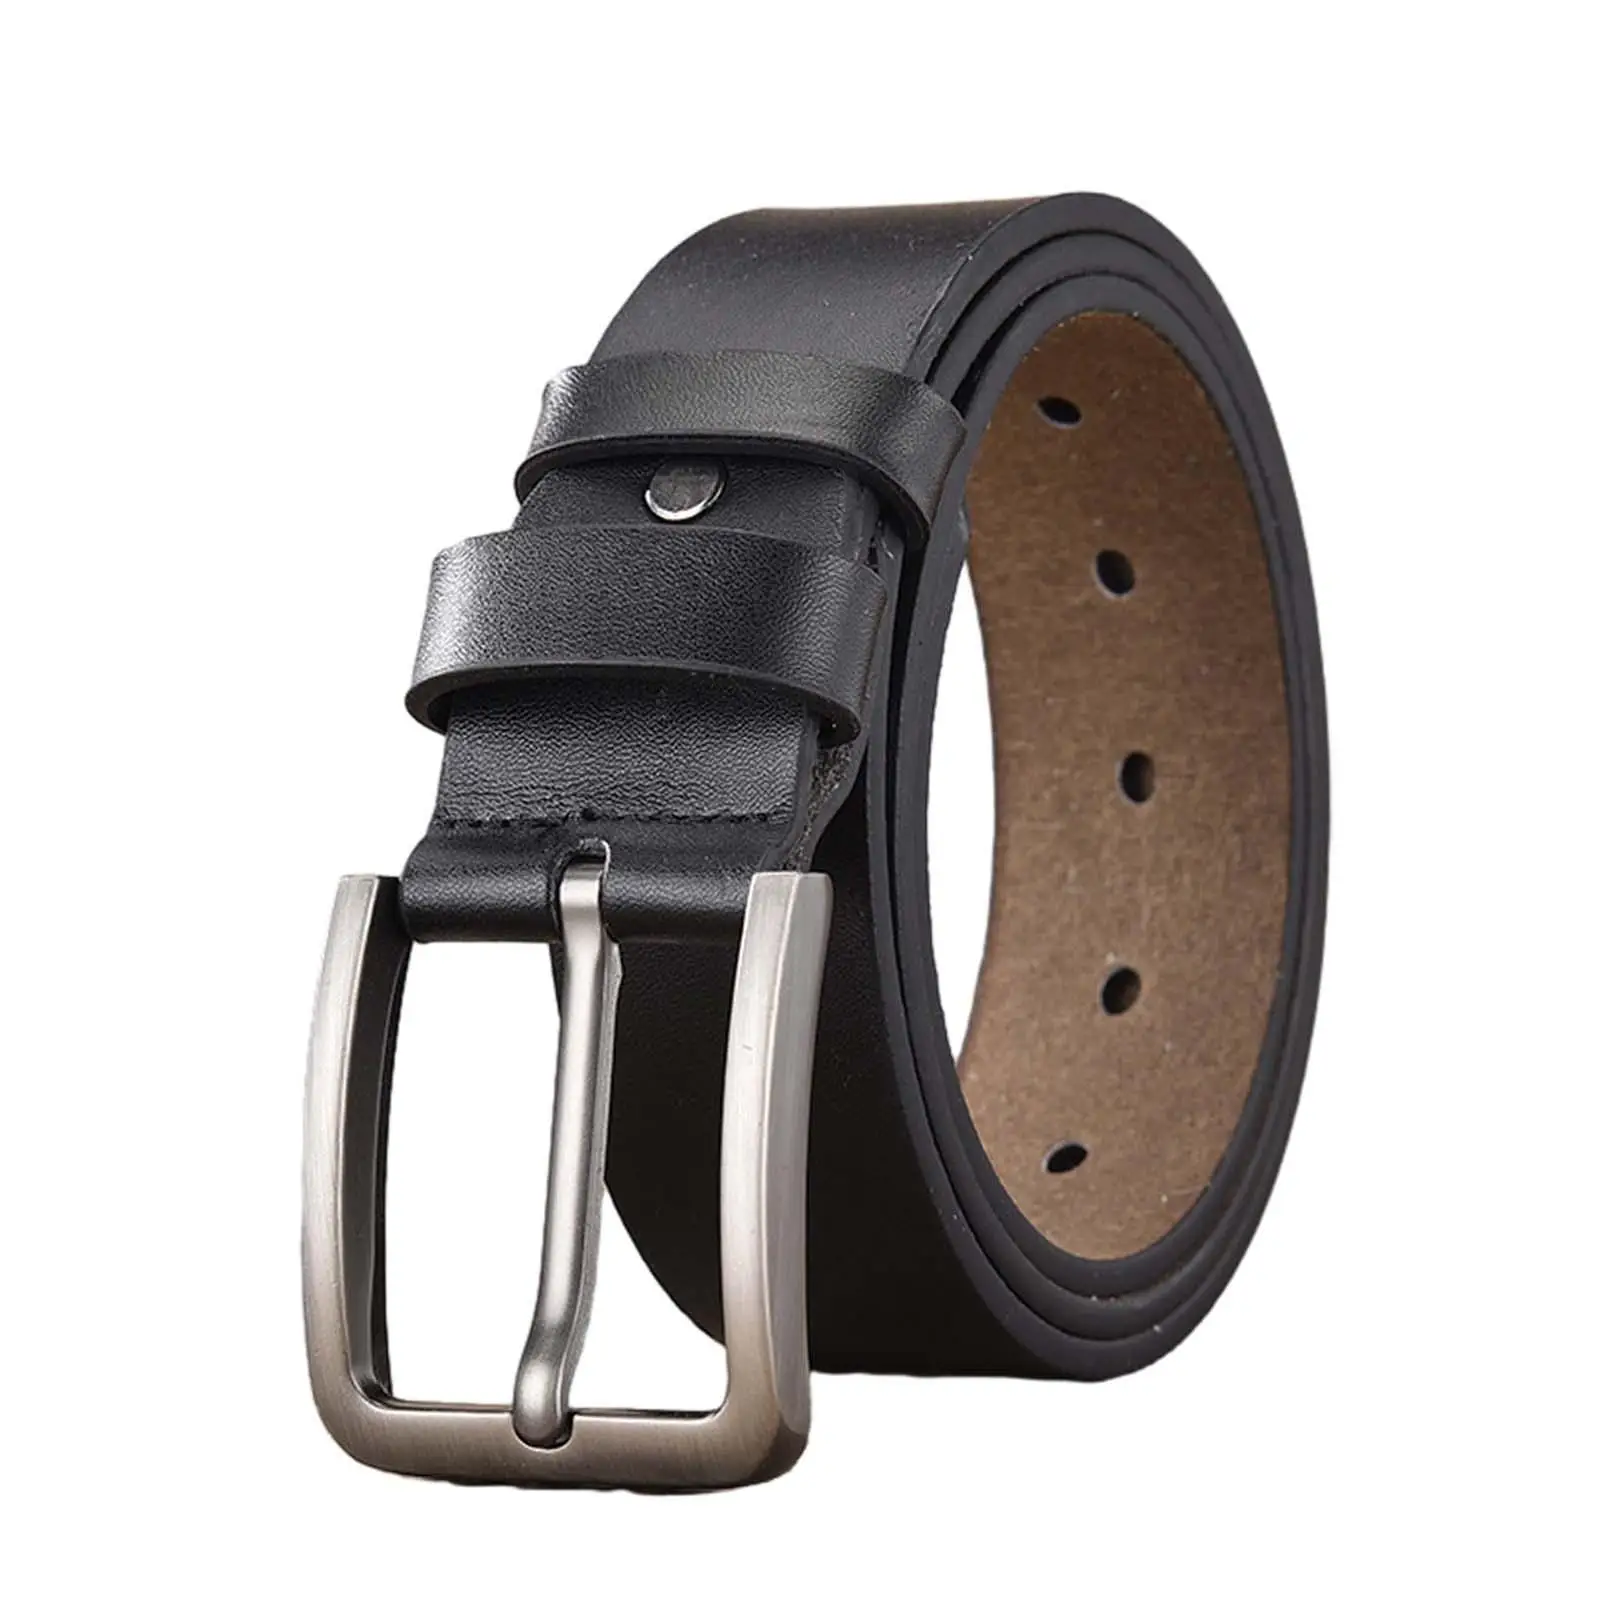 Men Dress Belt Adjustable 120cm Long Metal Pin Buckle Casual Waist Strap PU Leather Belt for Travel Uniform Trousers suits Jeans